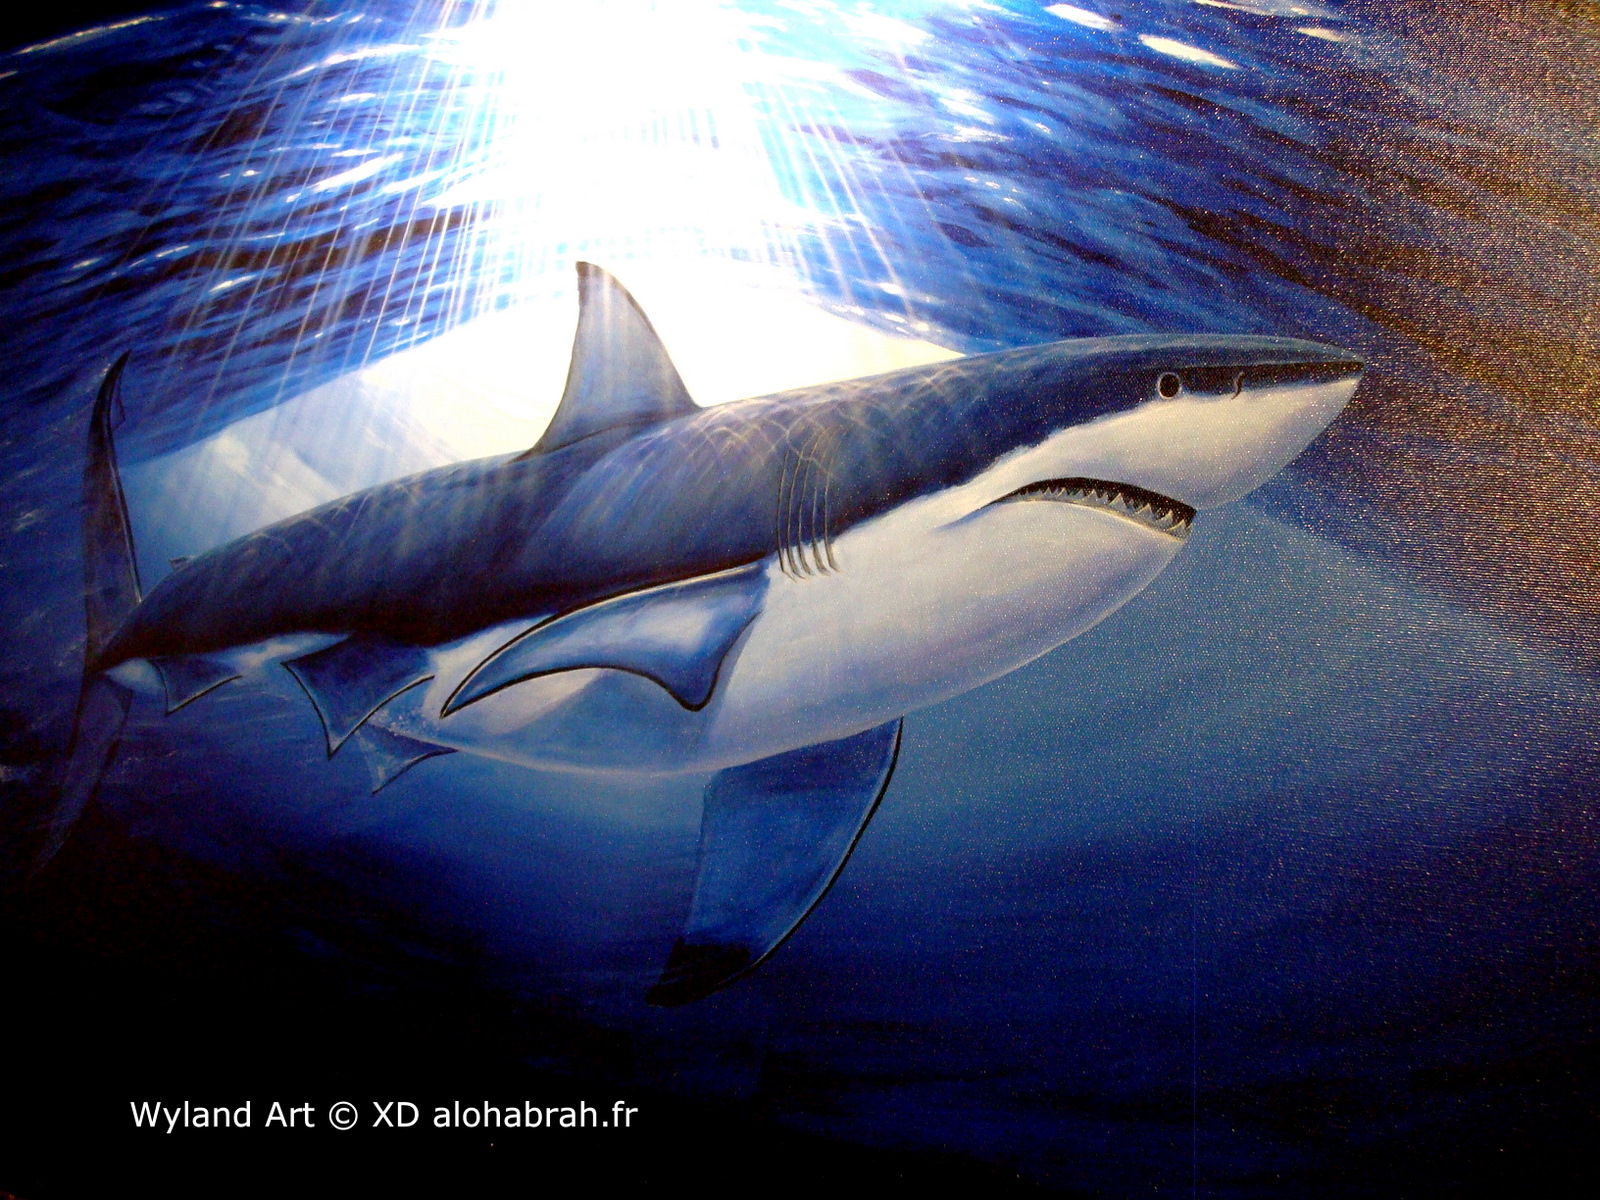 Big Shark - Wyland Art © XD alohabrah.fr